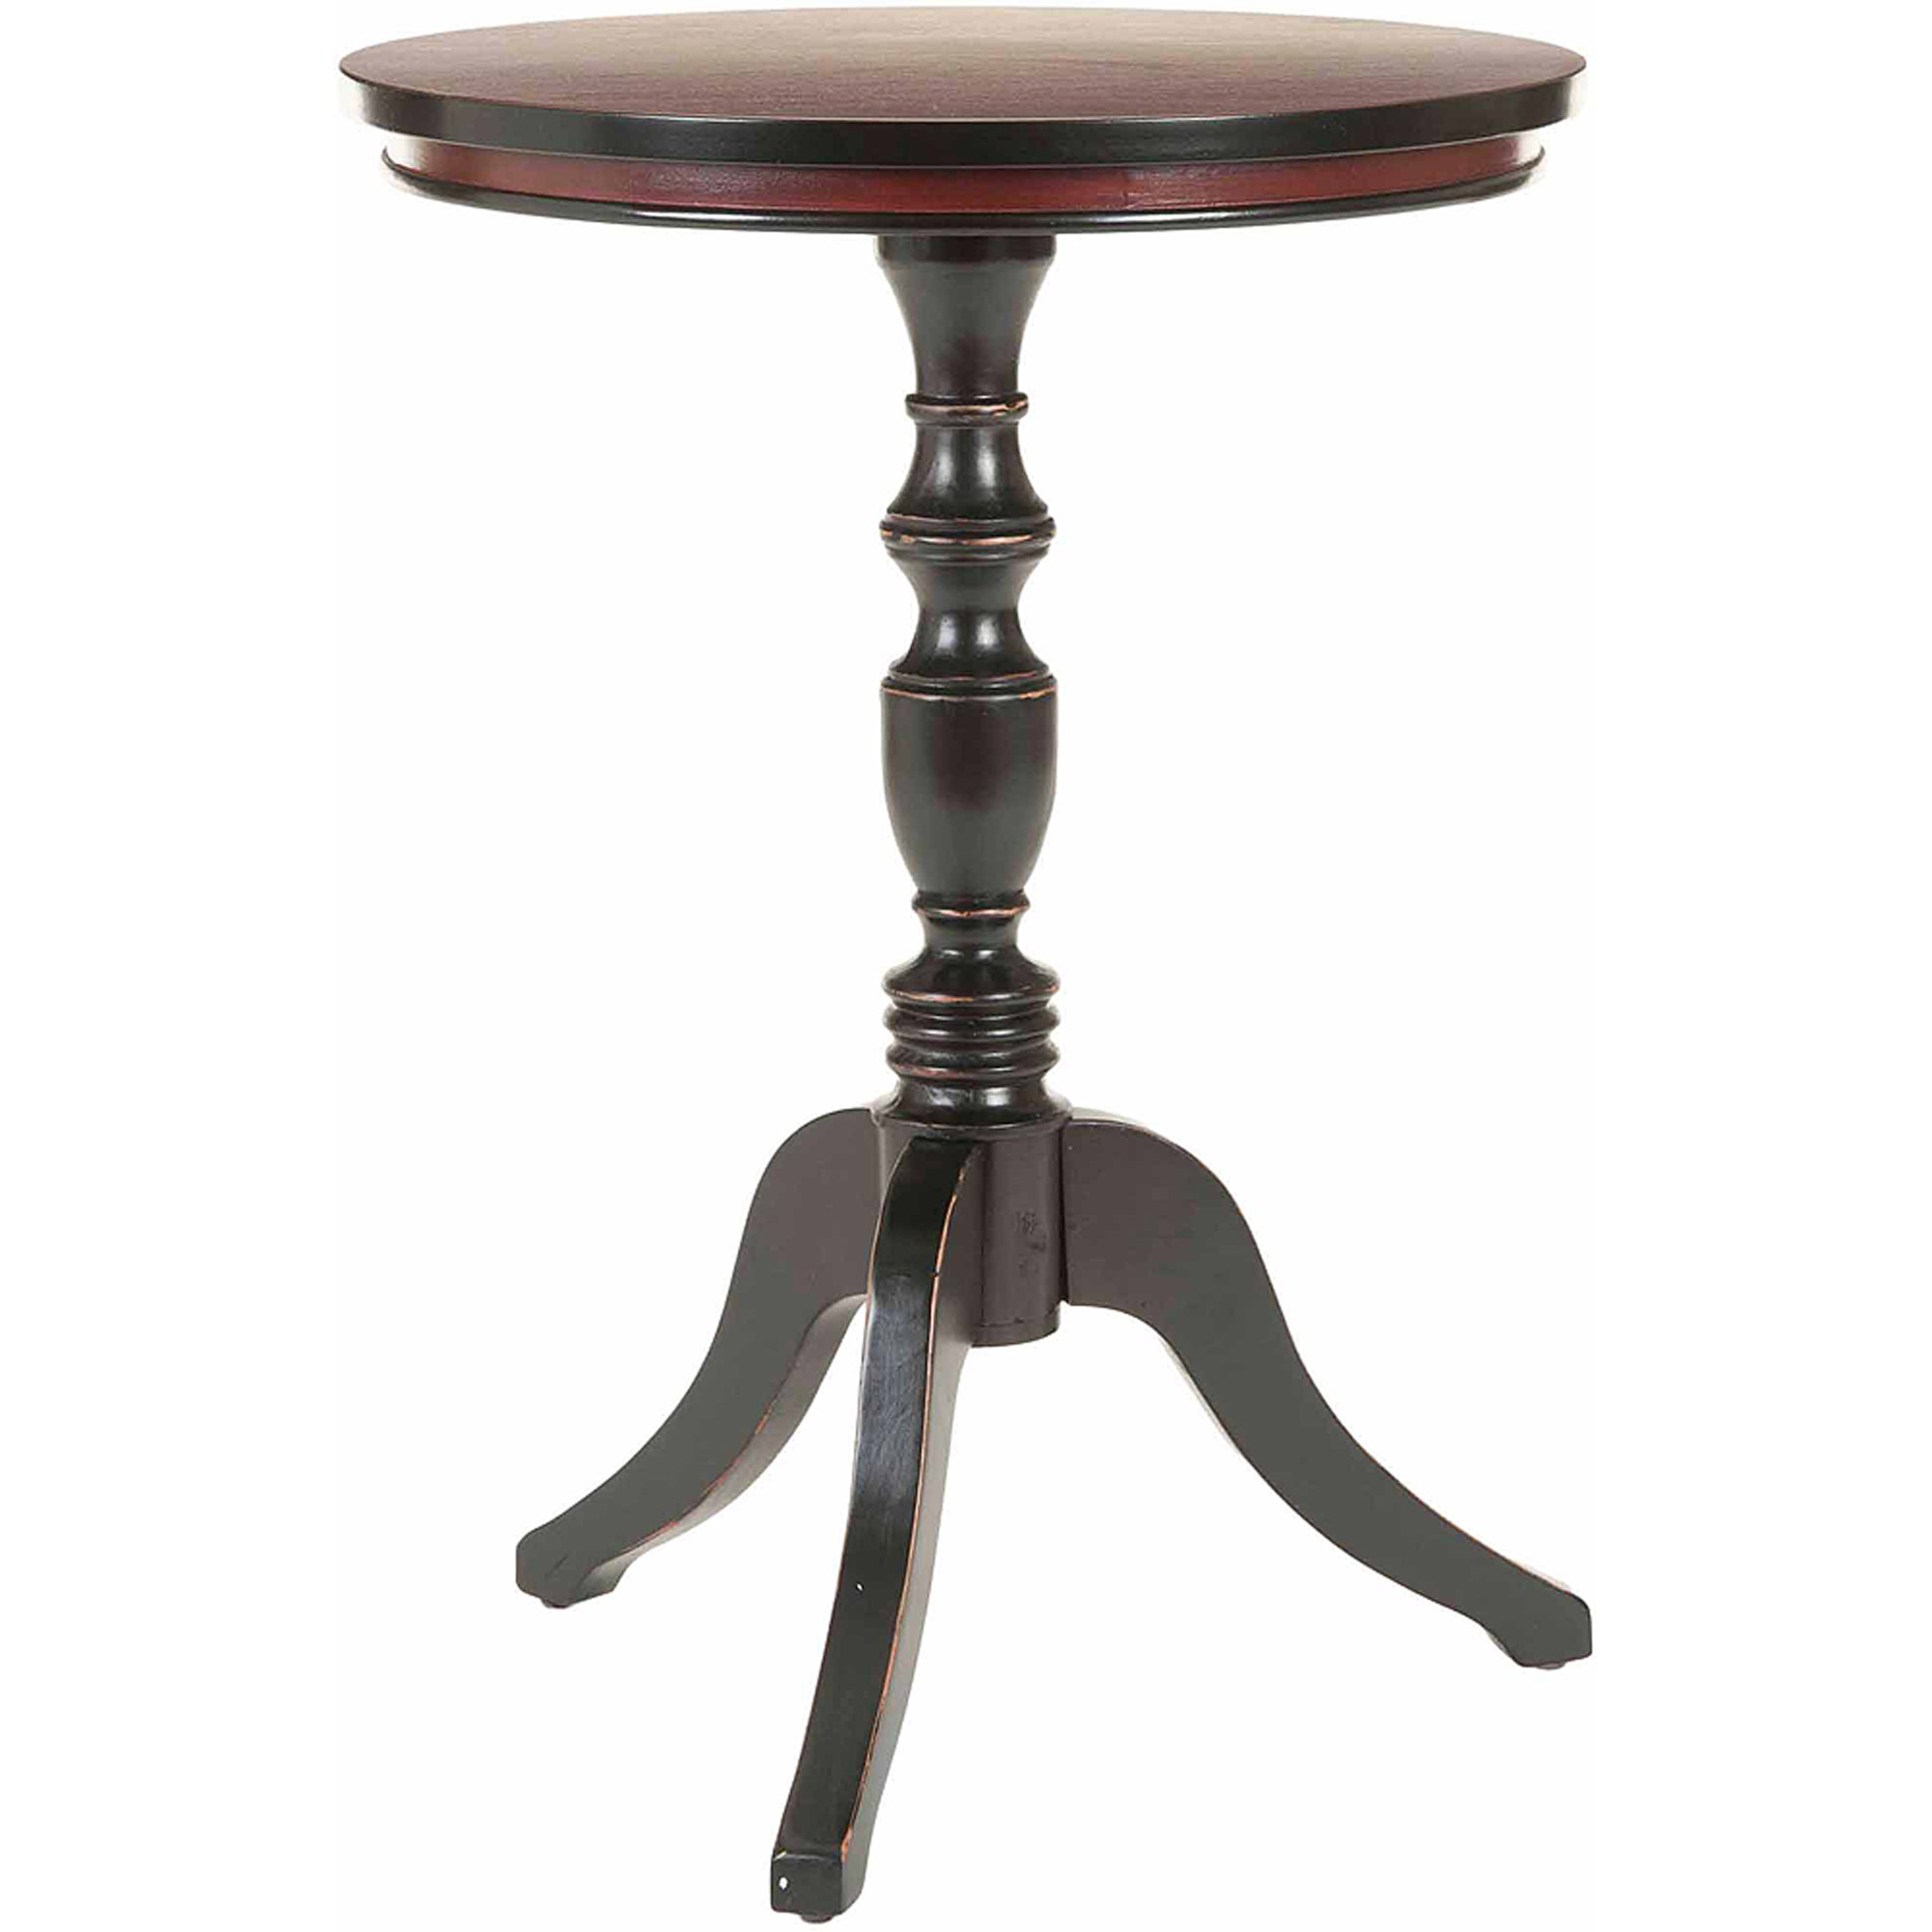 Safavieh Blake Side Table, Brown - image 1 of 4